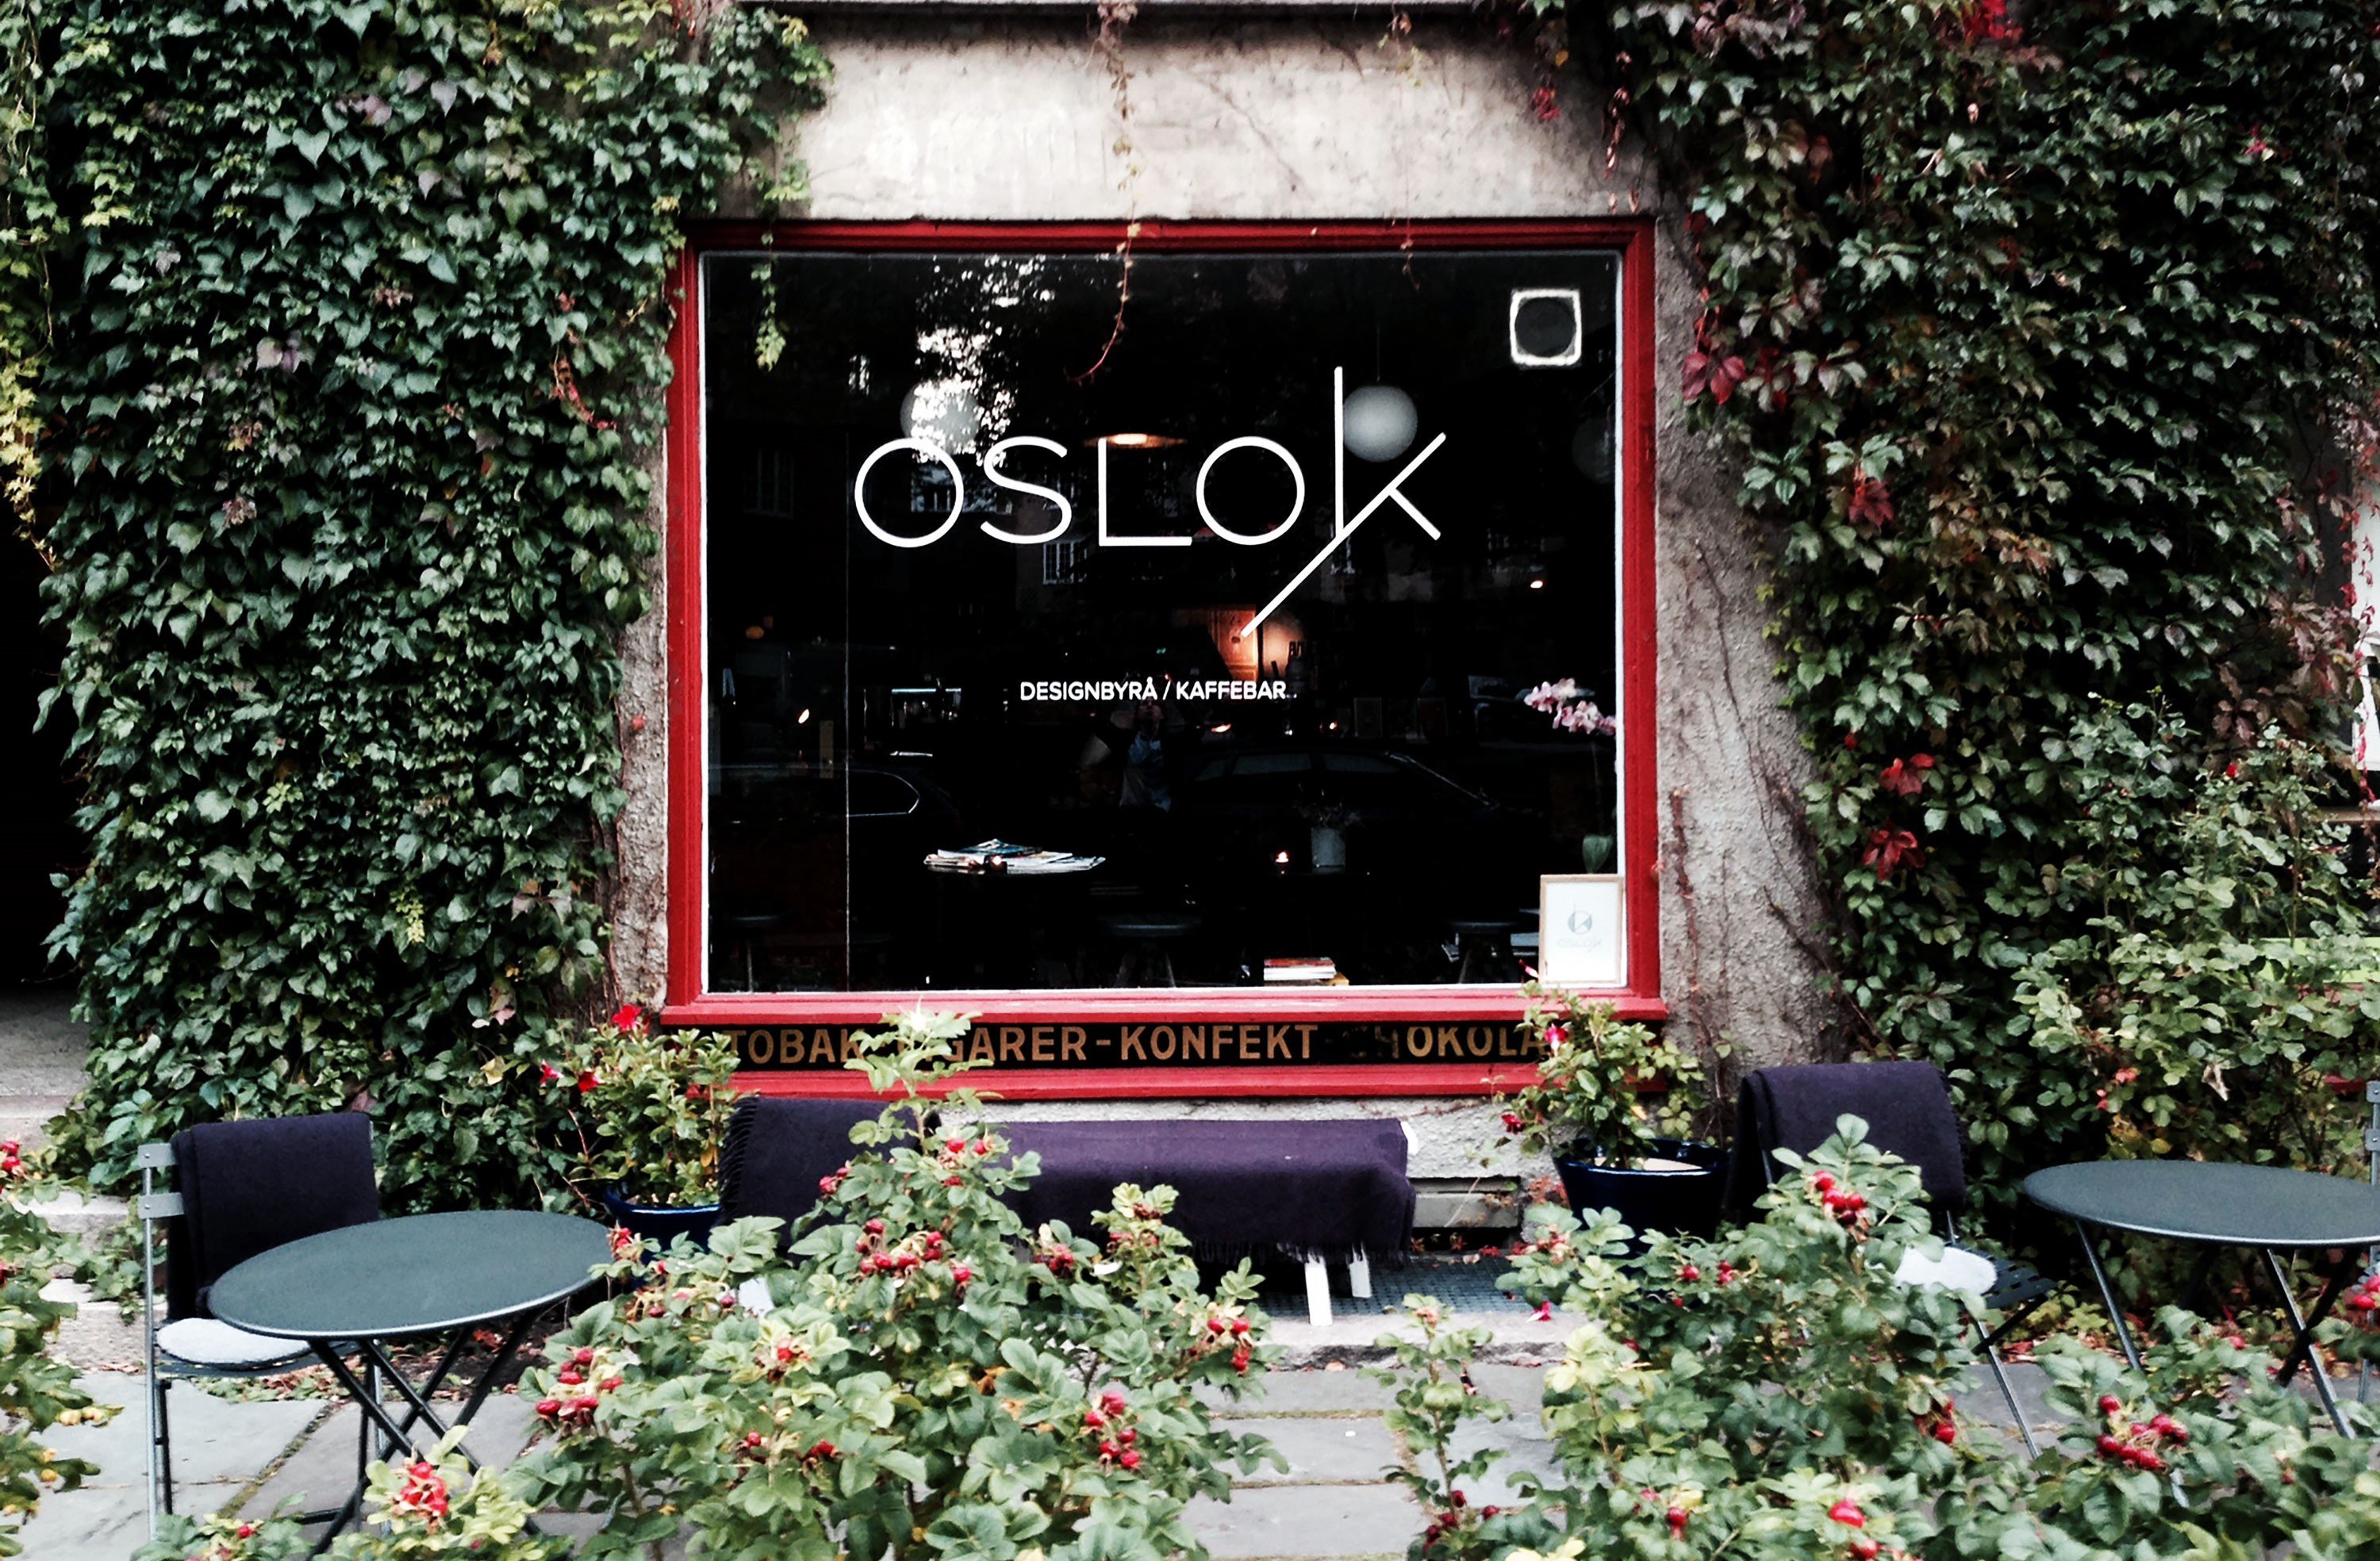 OsloK design agency and coffee shop